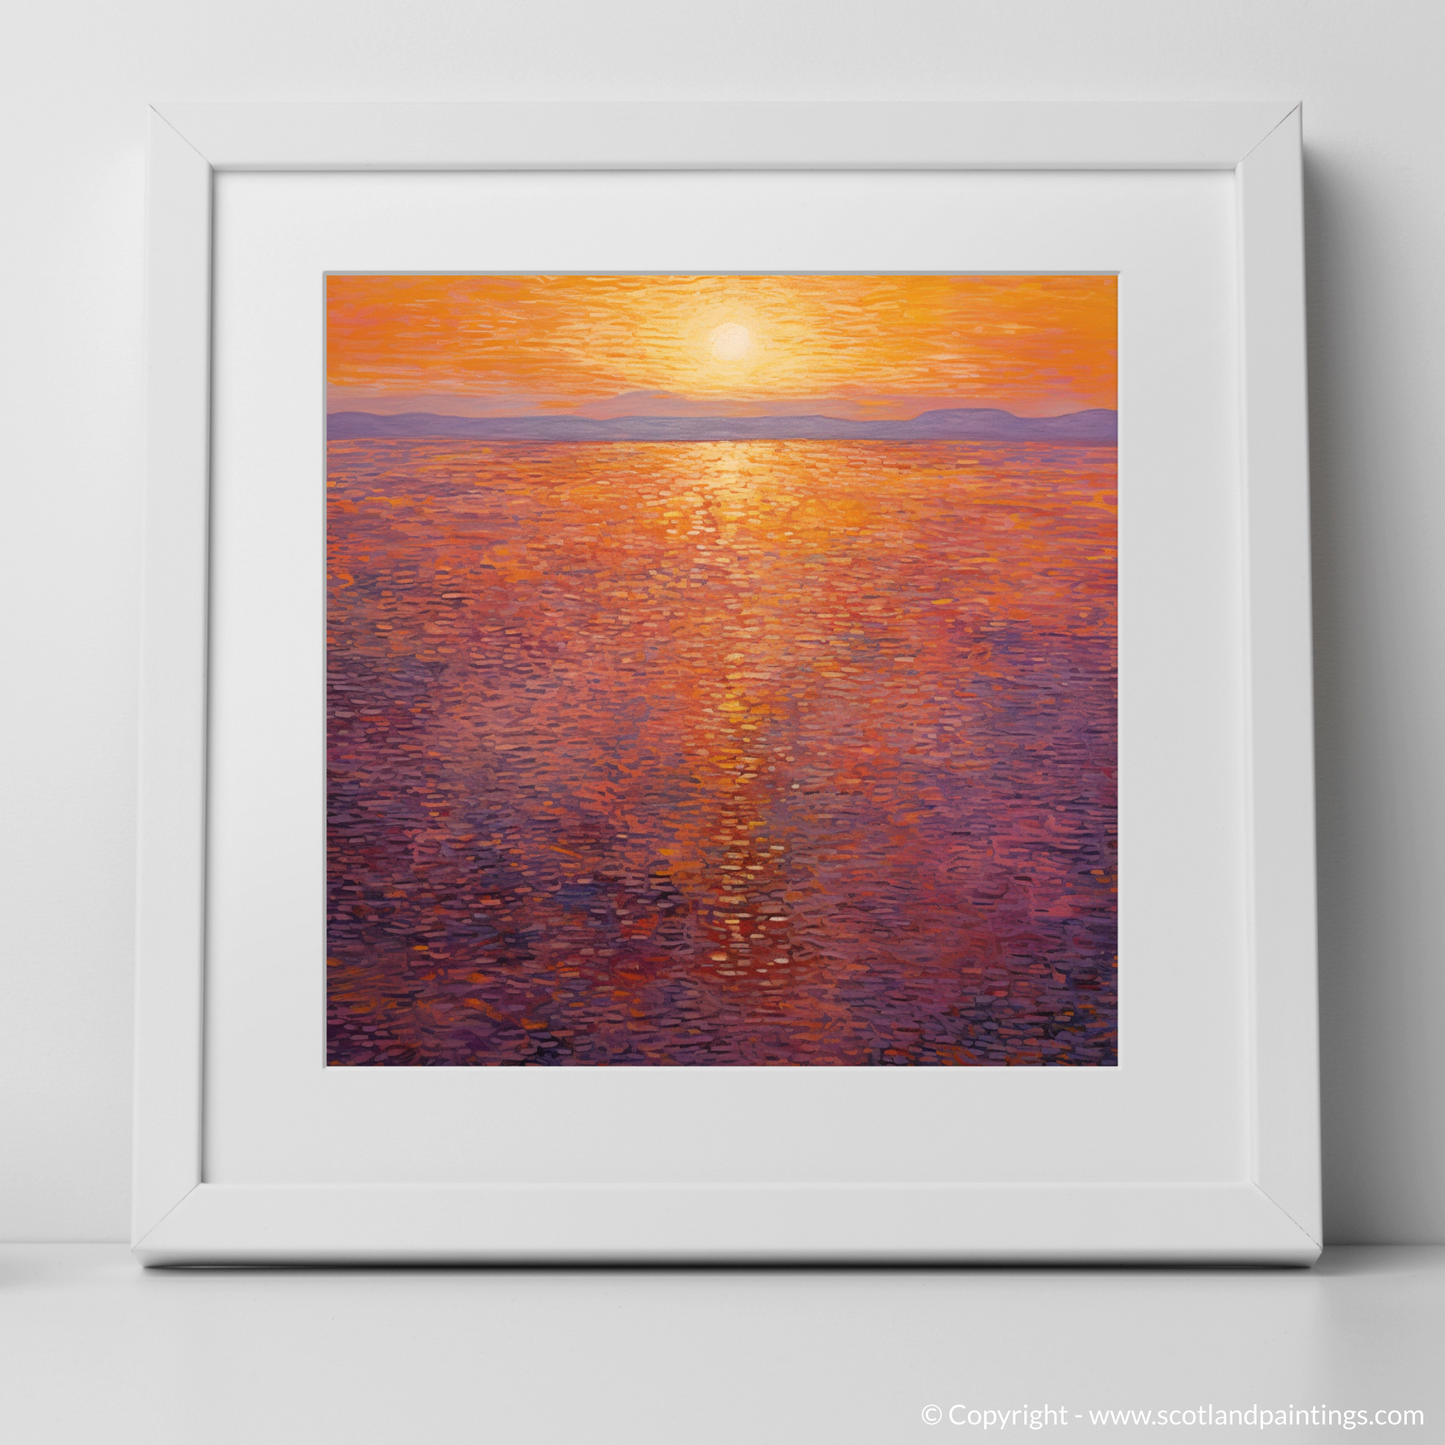 Kiloran Bay Sunset: A Tapestry of Twilight Hues